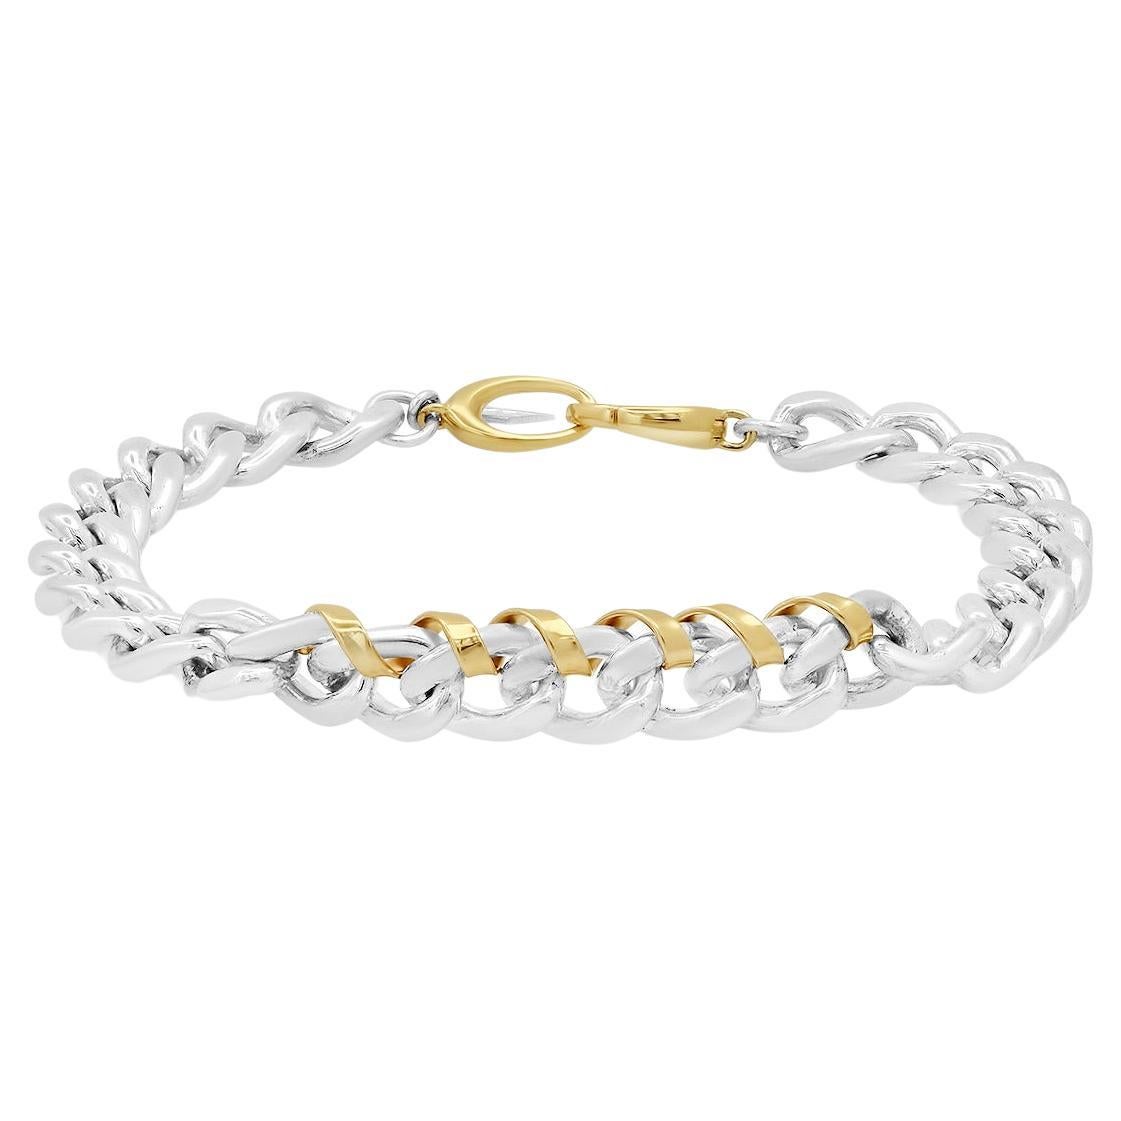 Sterling Silver "Heavy Metal" Wrap-Me-Up Chain Bracelet w/ 14K Gold: Size P/S